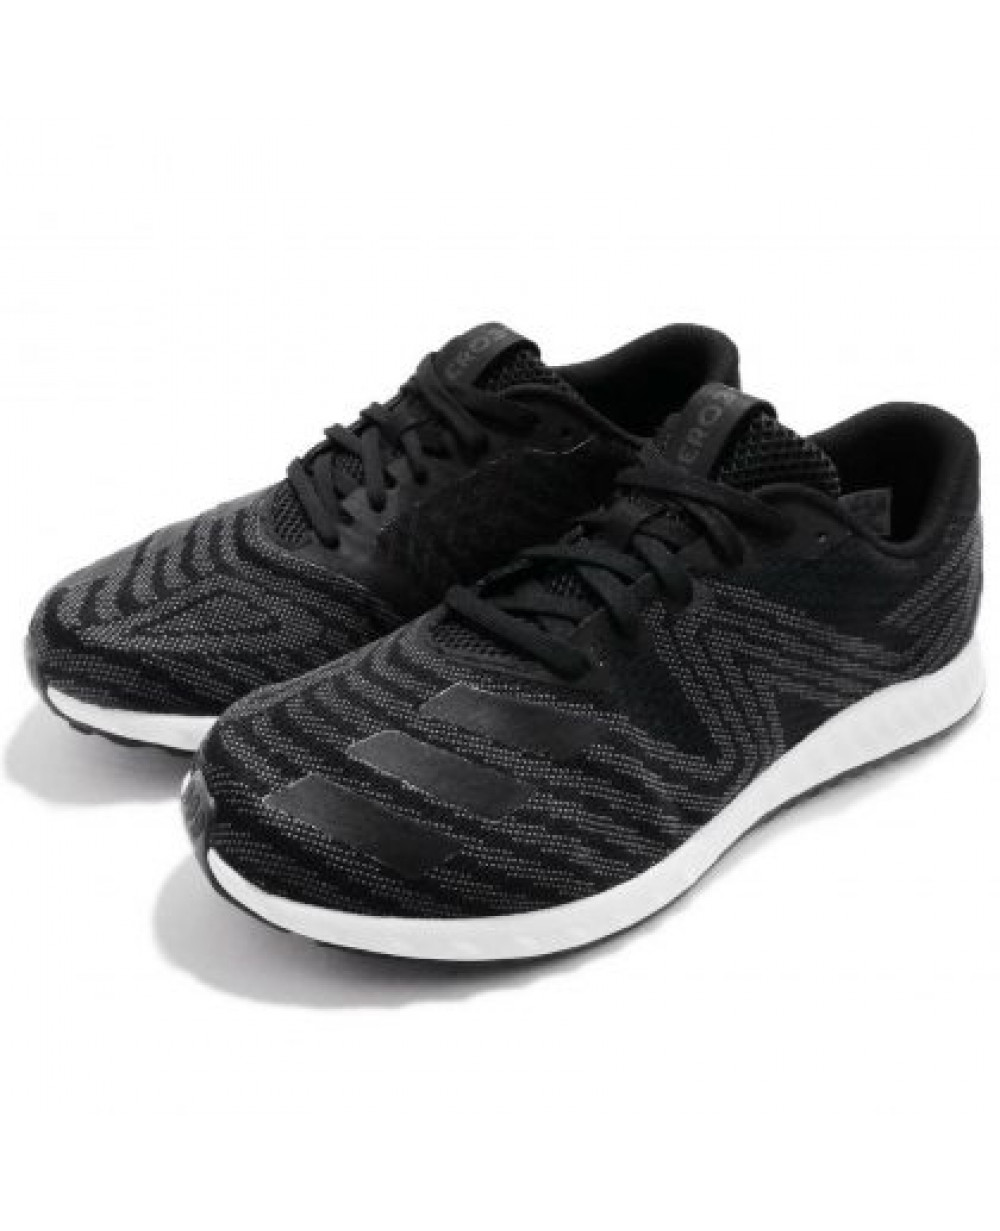 Adidas Aerobounce PR Running Black/White Shoes Men DA9917